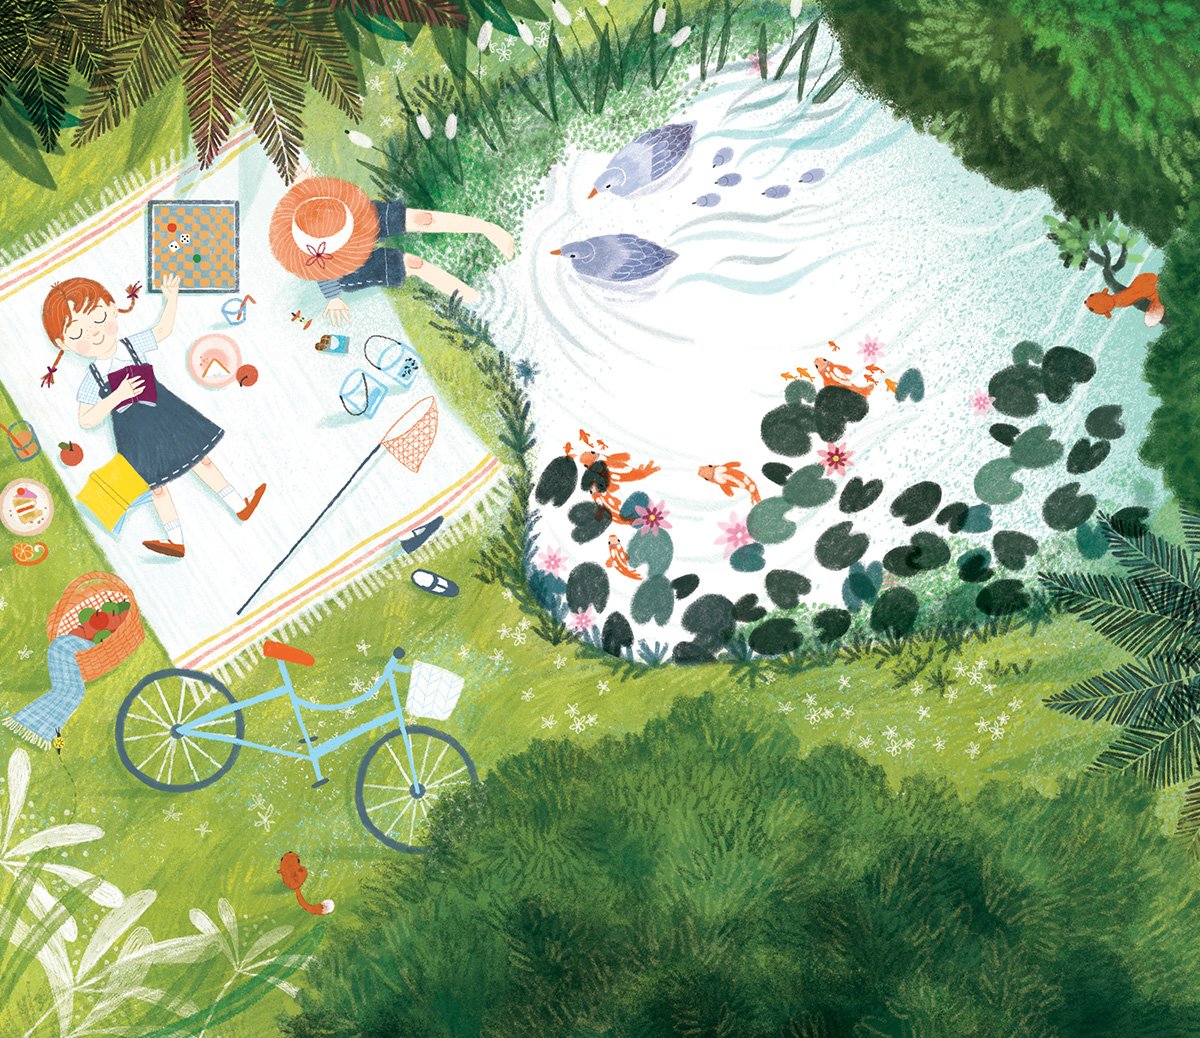 kim-geyer-picnic-illustration.jpg